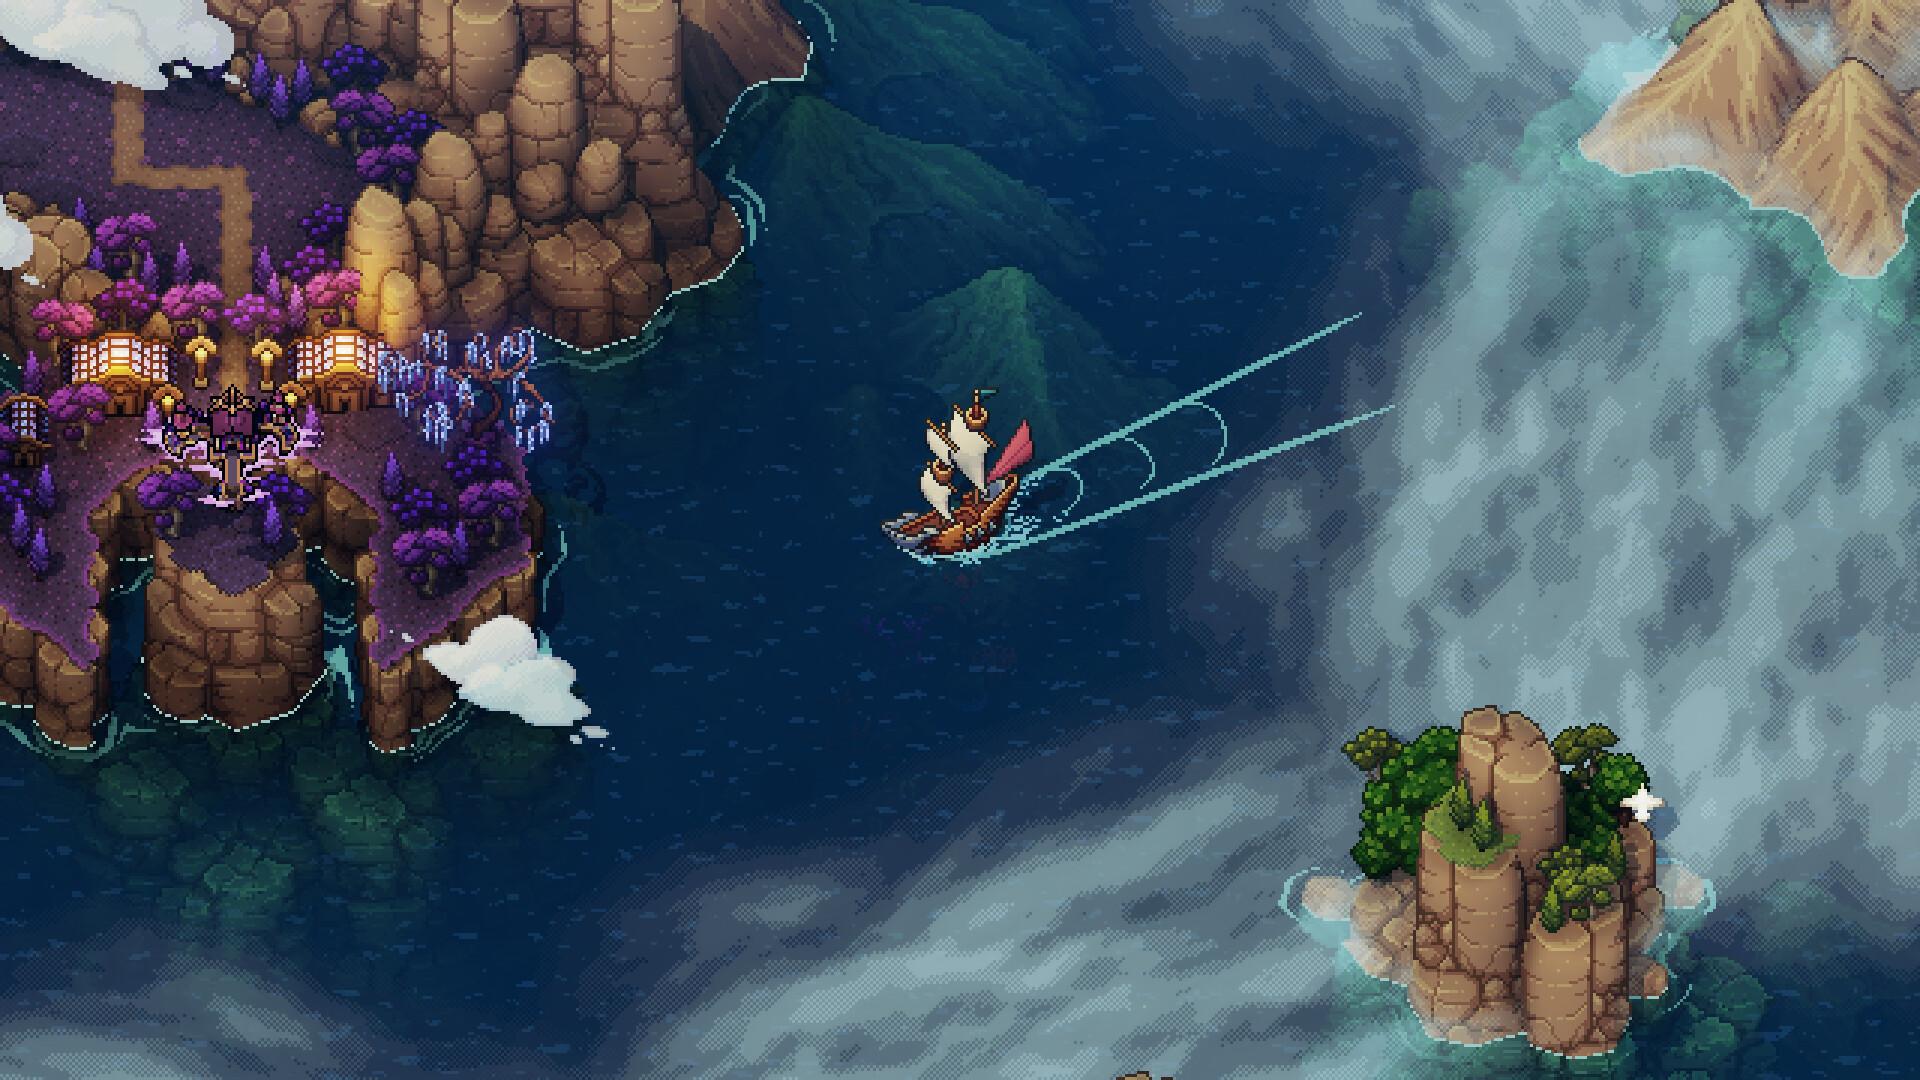 Screenshot №7 from game Sea of Stars